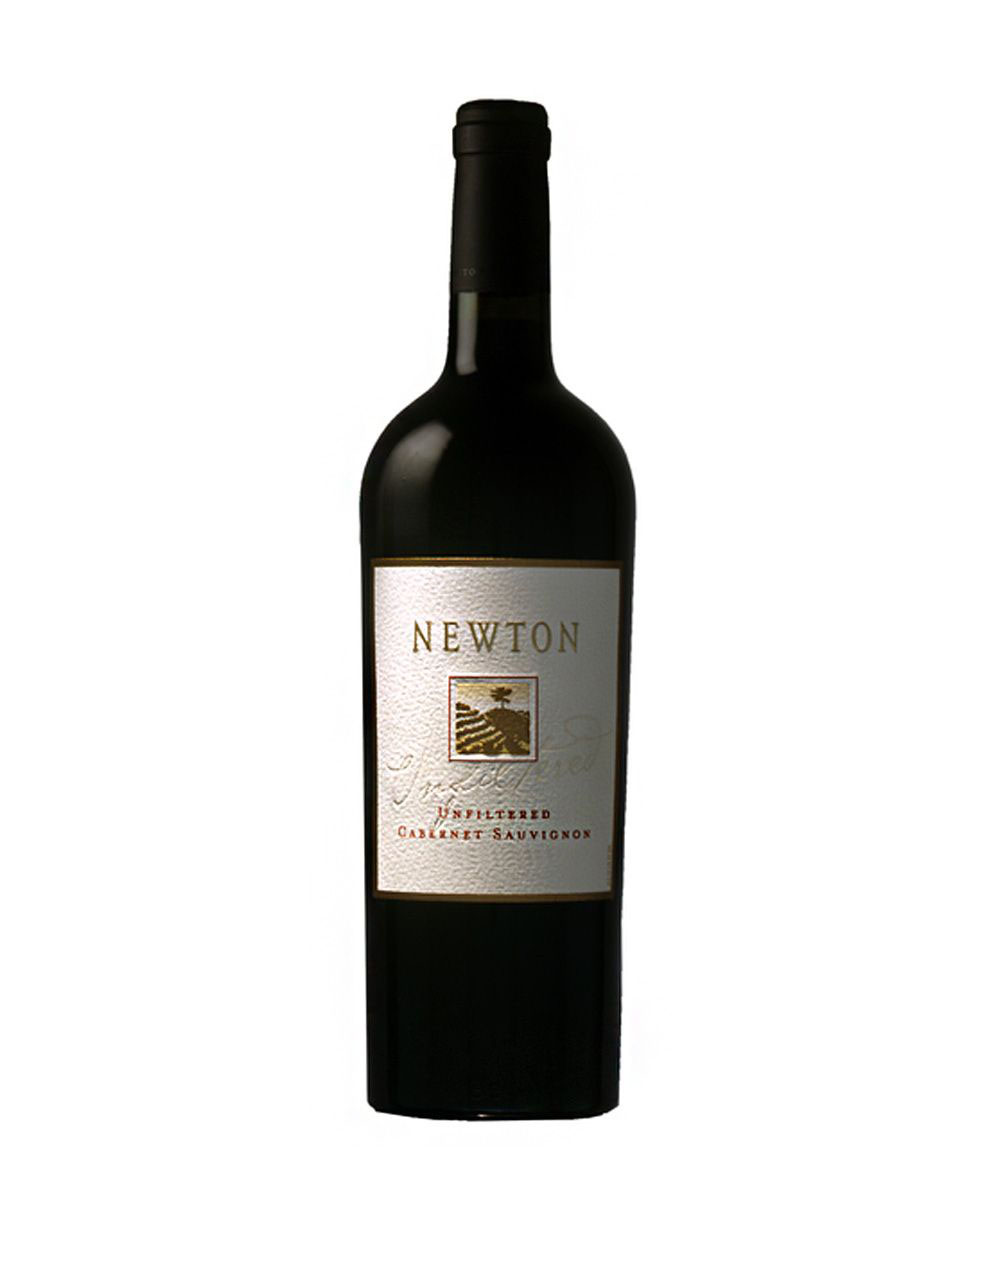 Kenwood Vineyards Sonoma Series Chardonnay